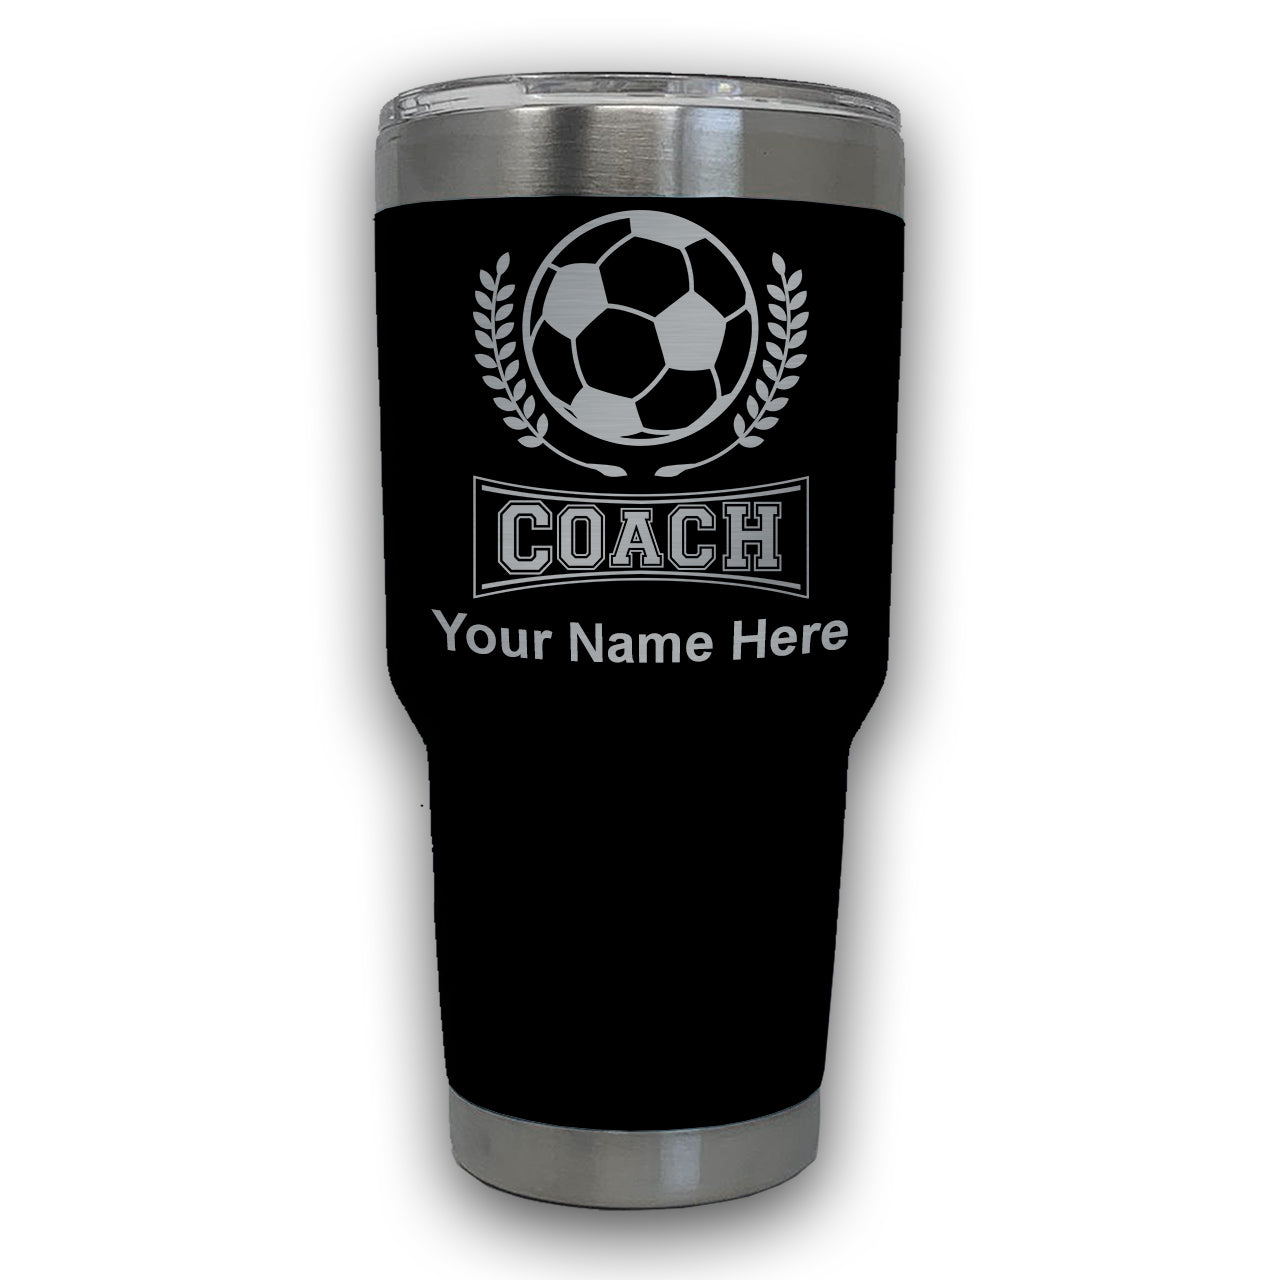 LaserGram 30oz Tumbler Mug, Soccer Coach, Personalized Engraving Included